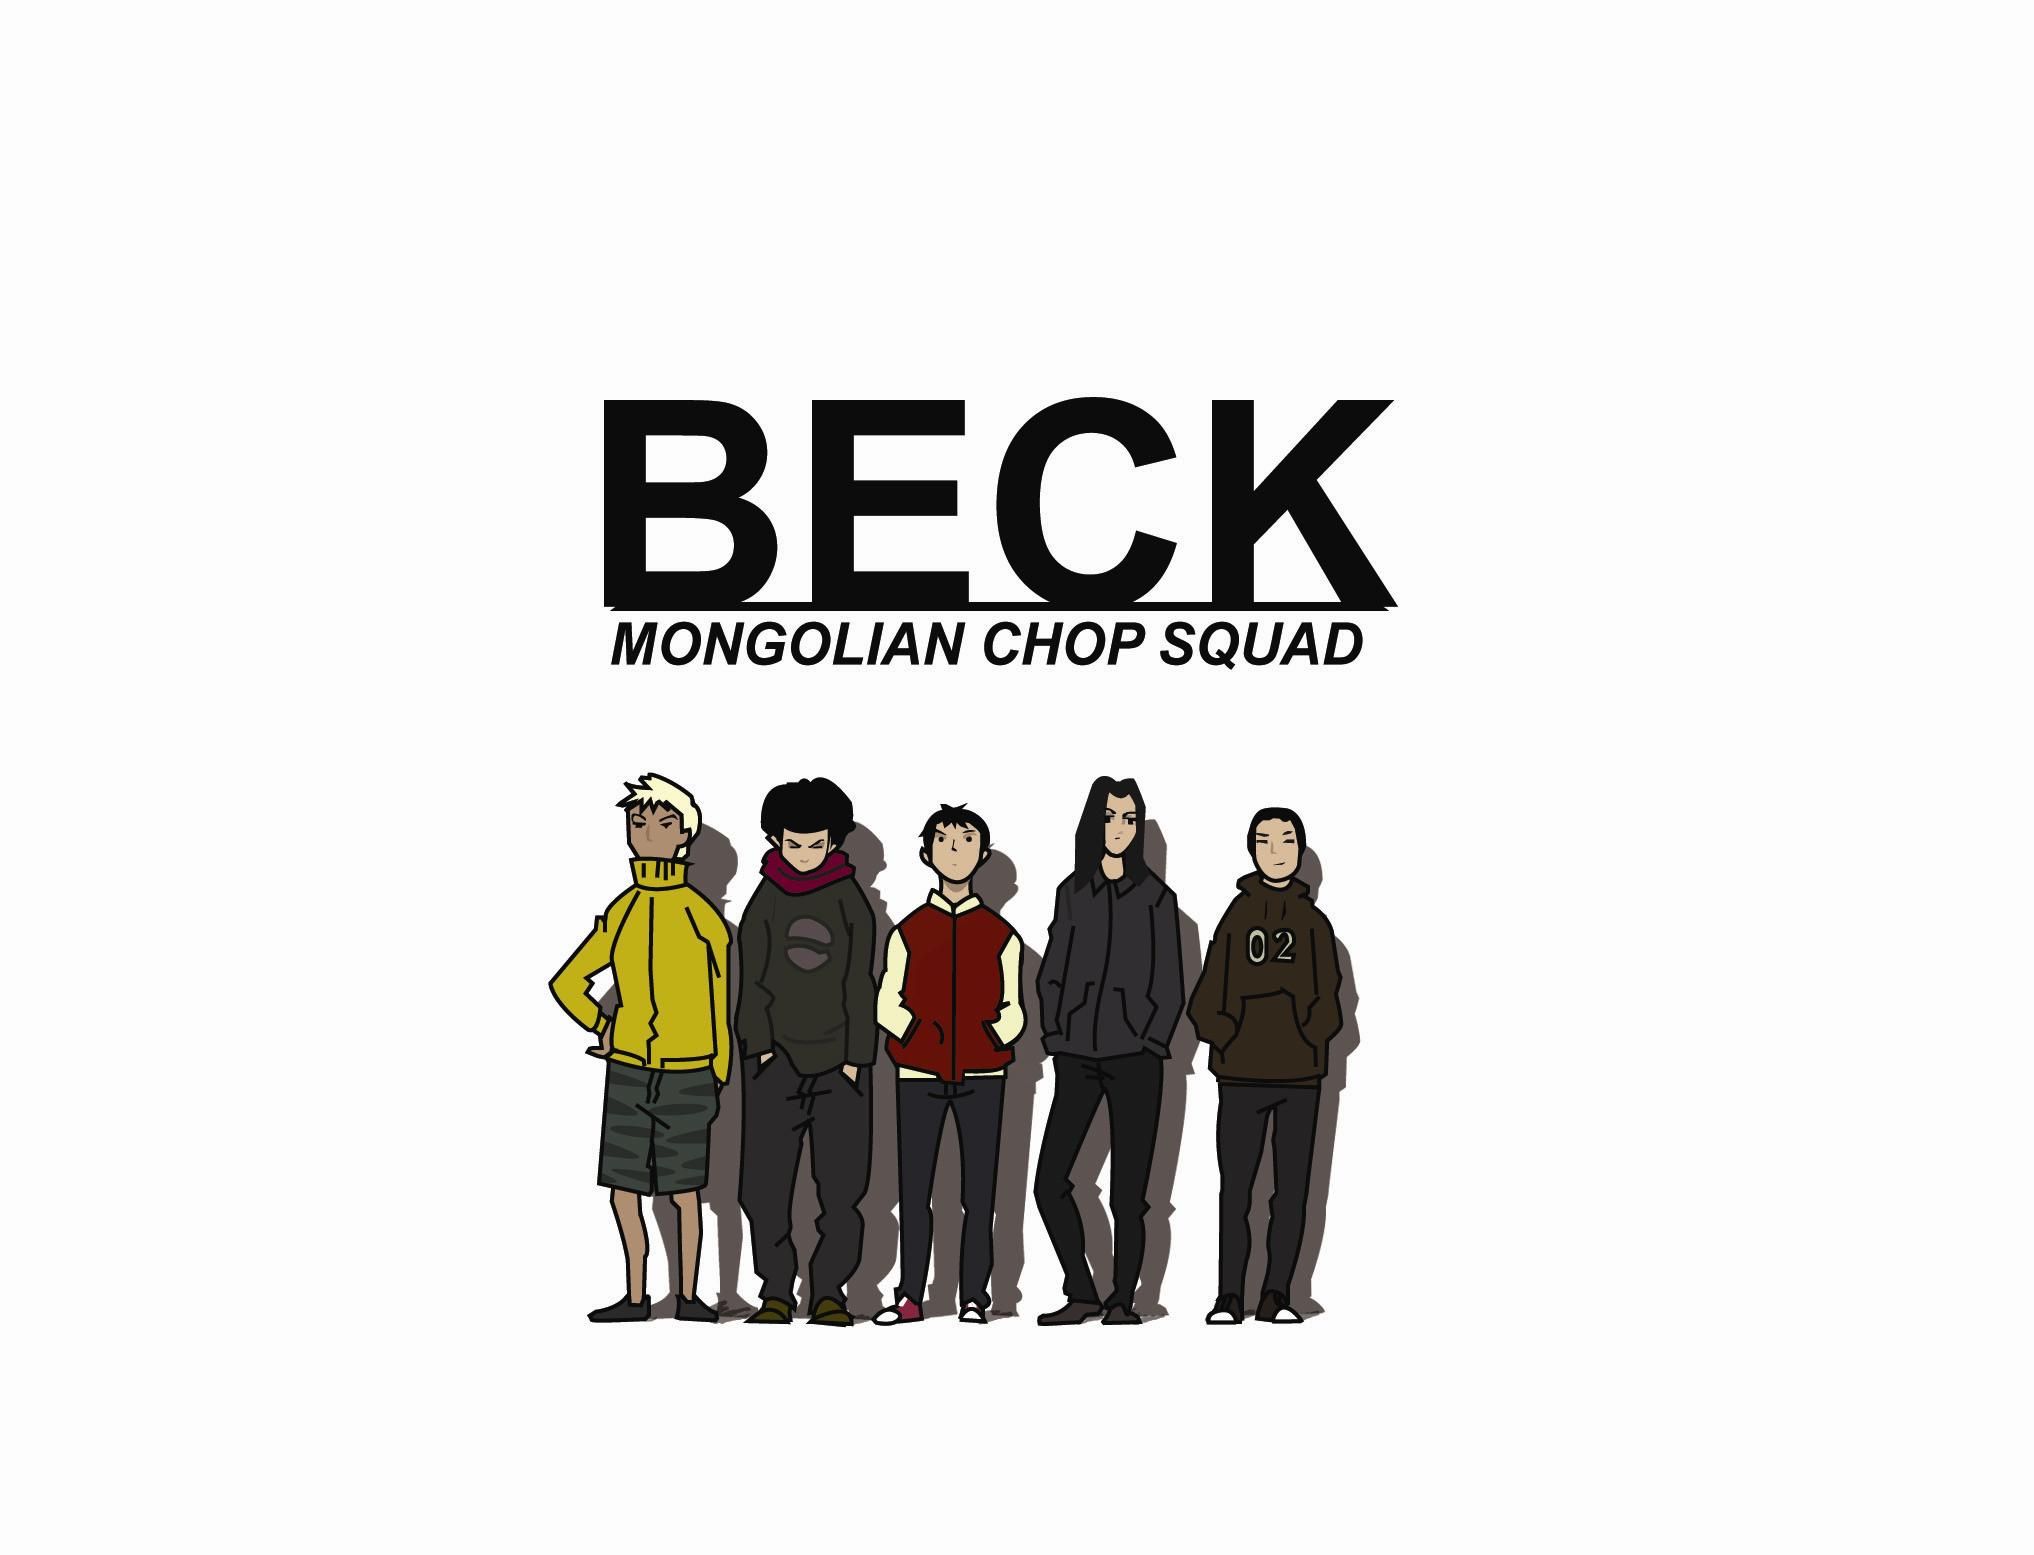 Beck-Mongolian-Chop-Squad-Wallpaper-HD | wallpapers55.com - Best ...